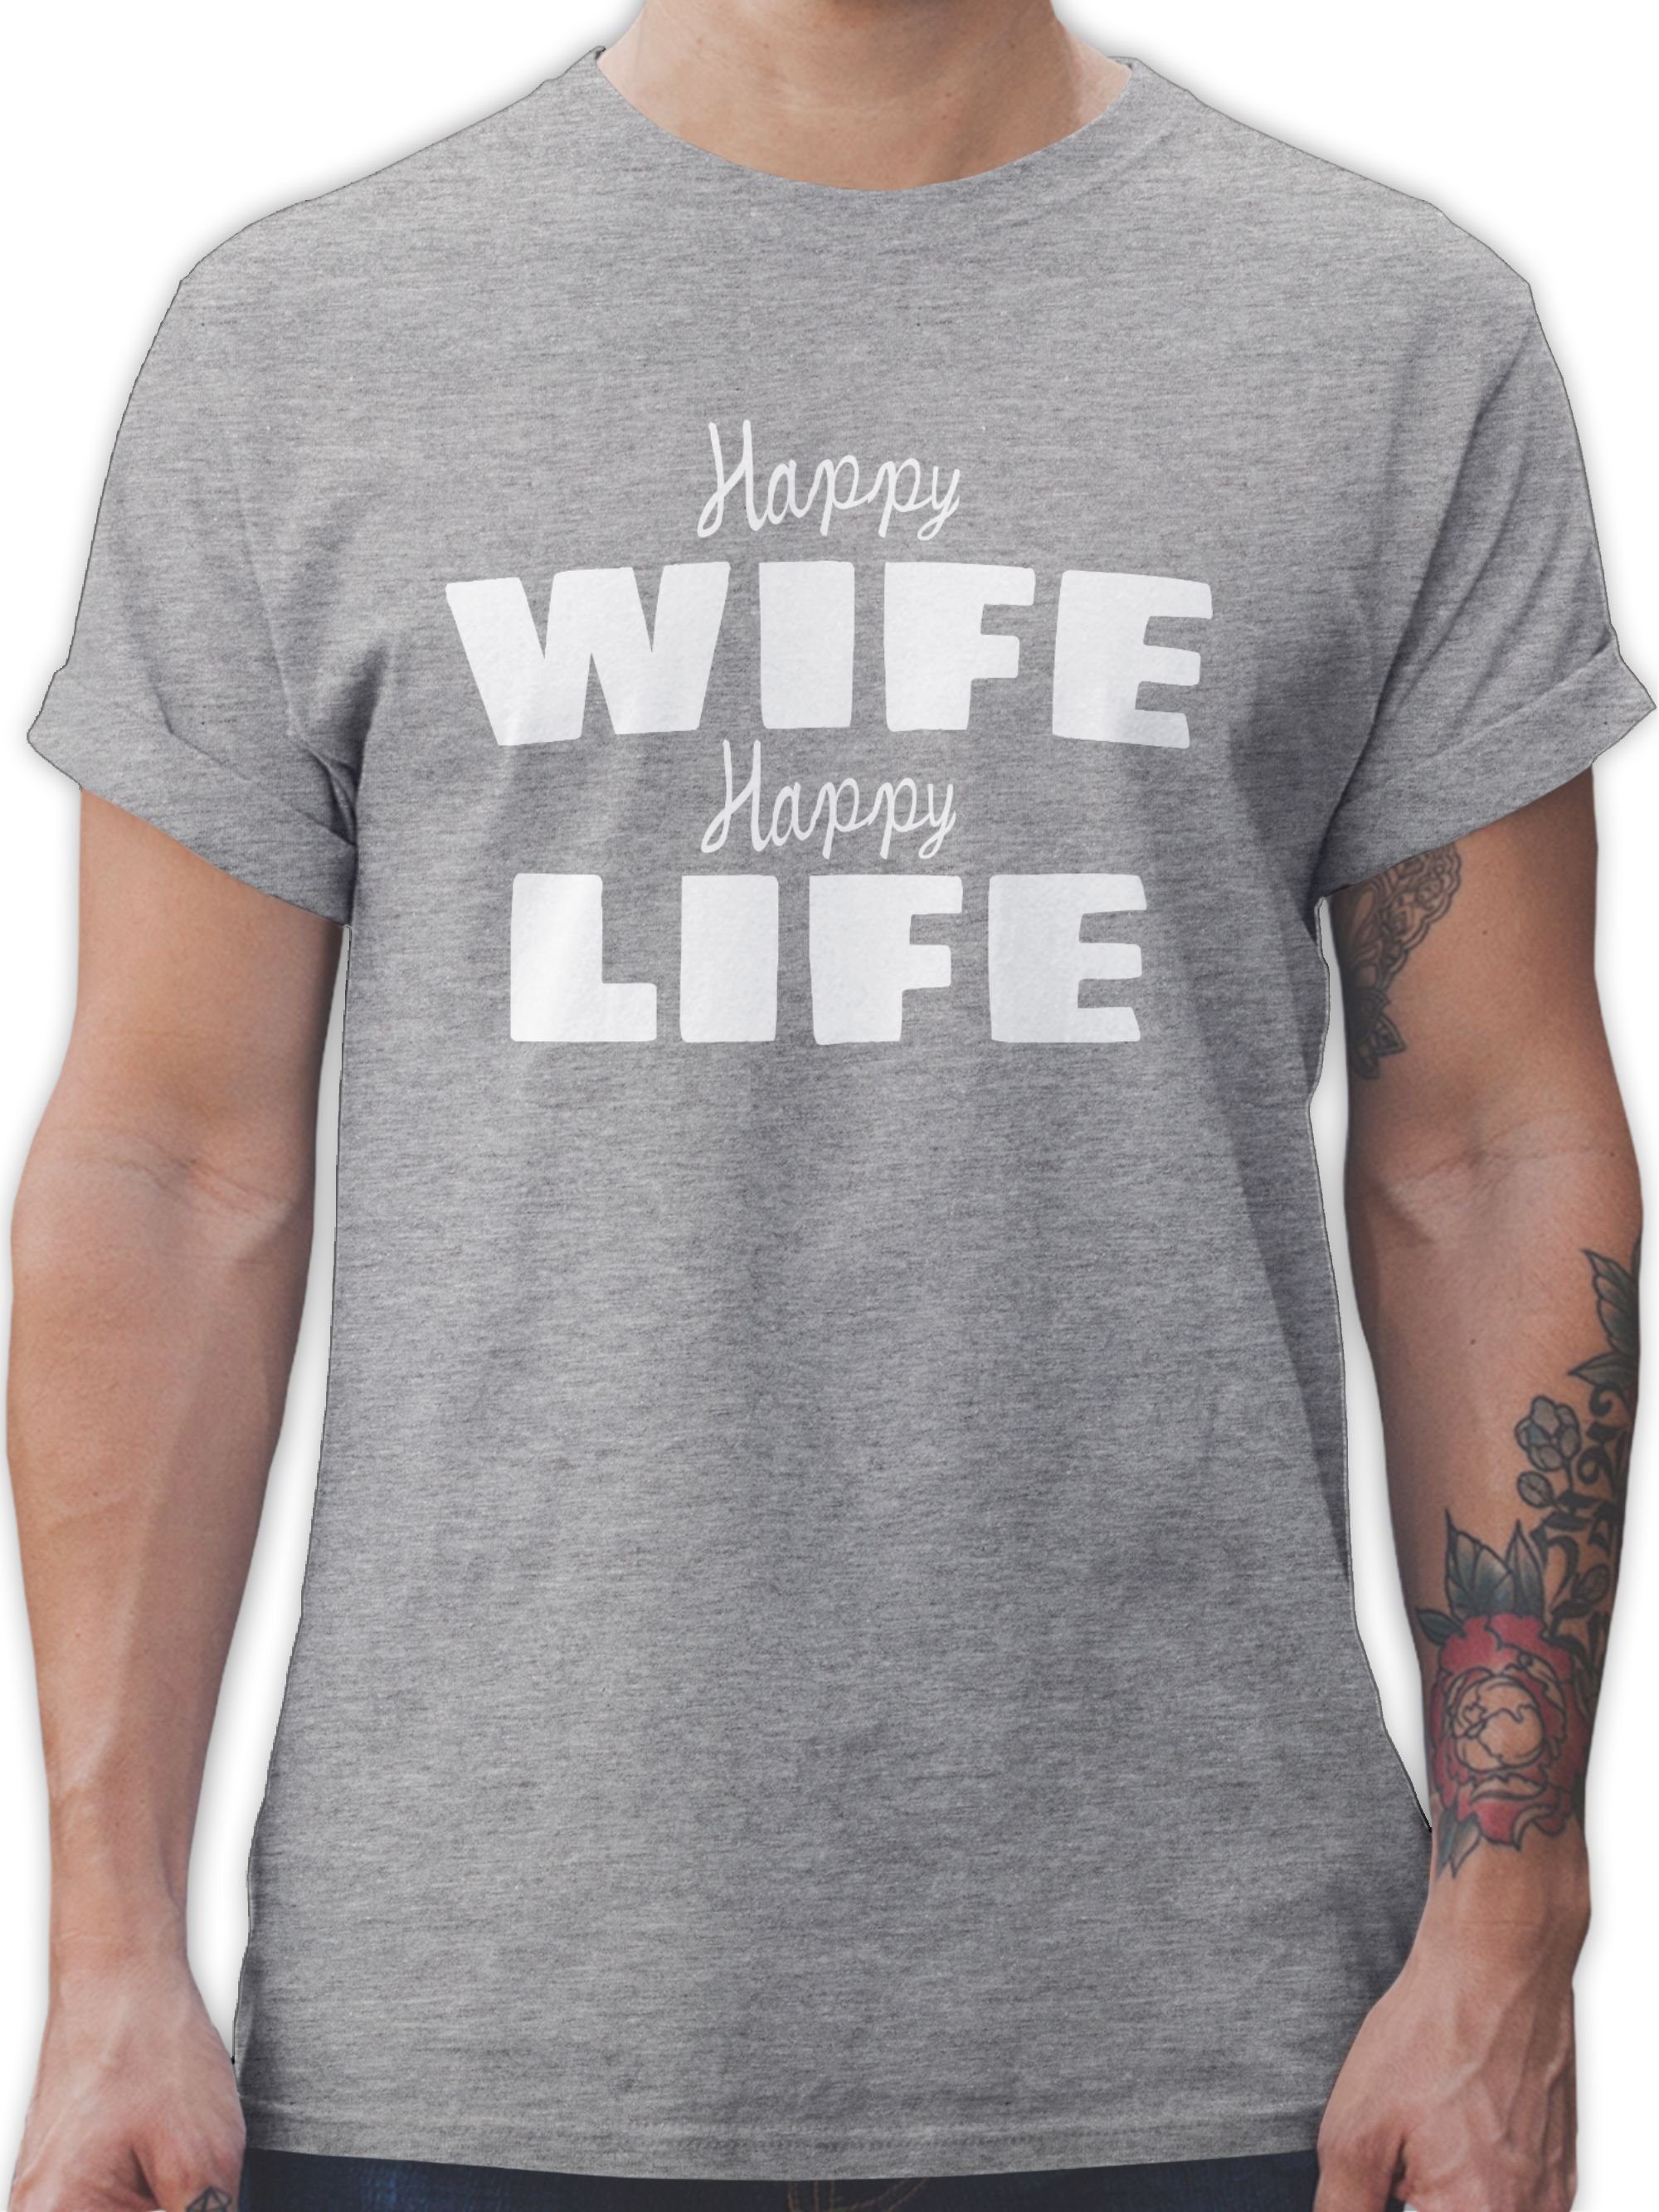 49++ Happy wife happy life sprueche ideas